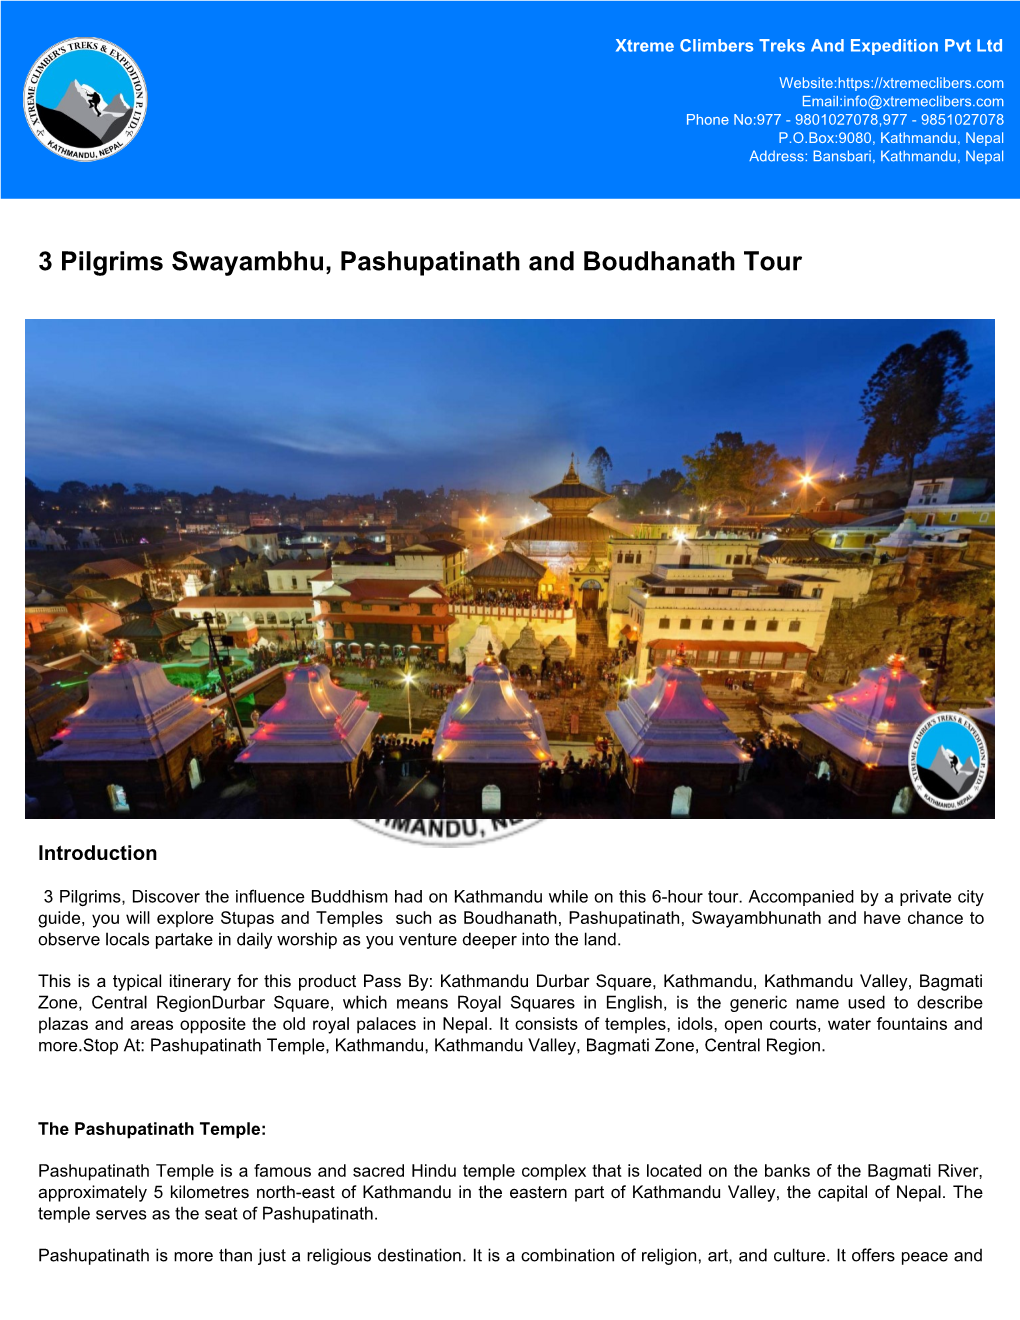 3 Pilgrims Swayambhu, Pashupatinath and Boudhanath Tour